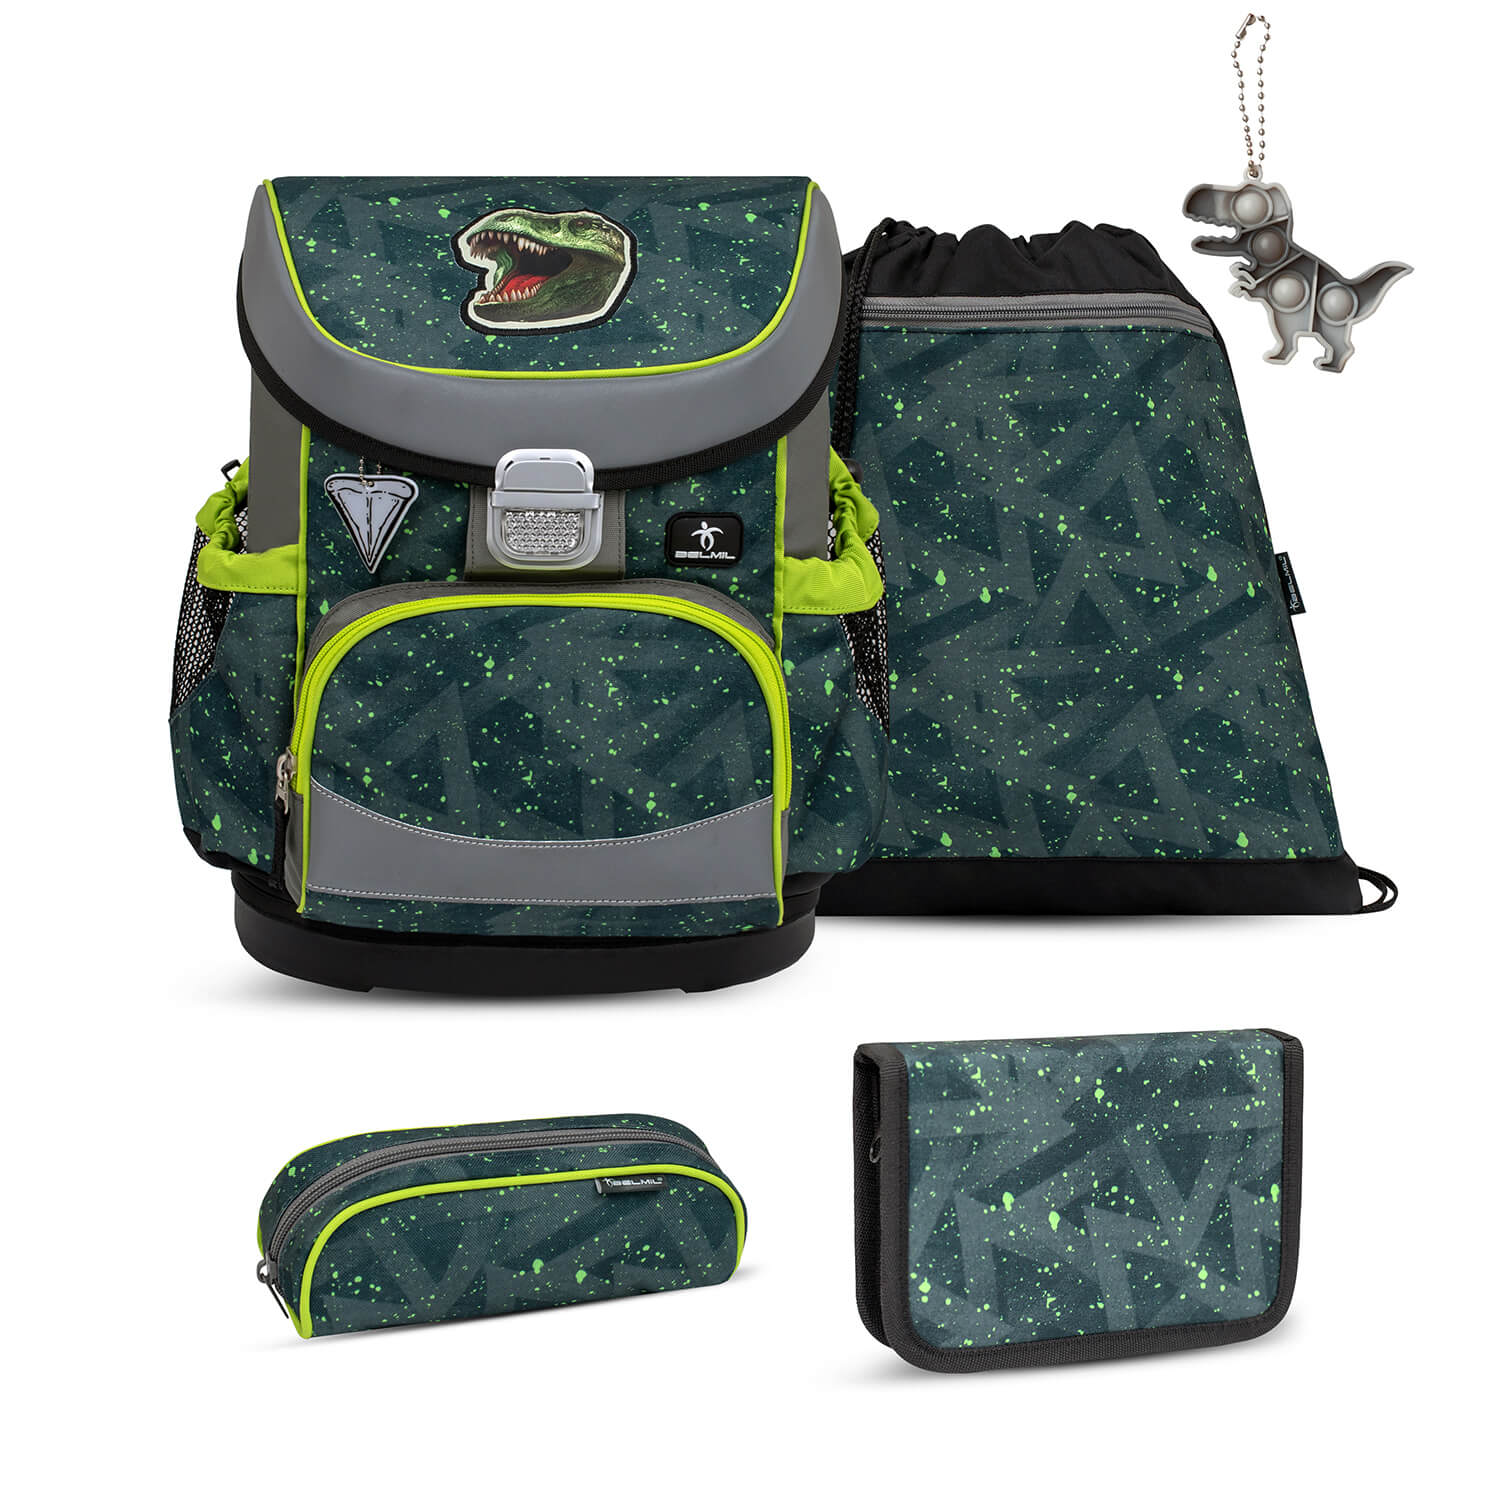 Mini-Fit T-rex Roar schoolbag set 5 pcs with GRATIS keychain